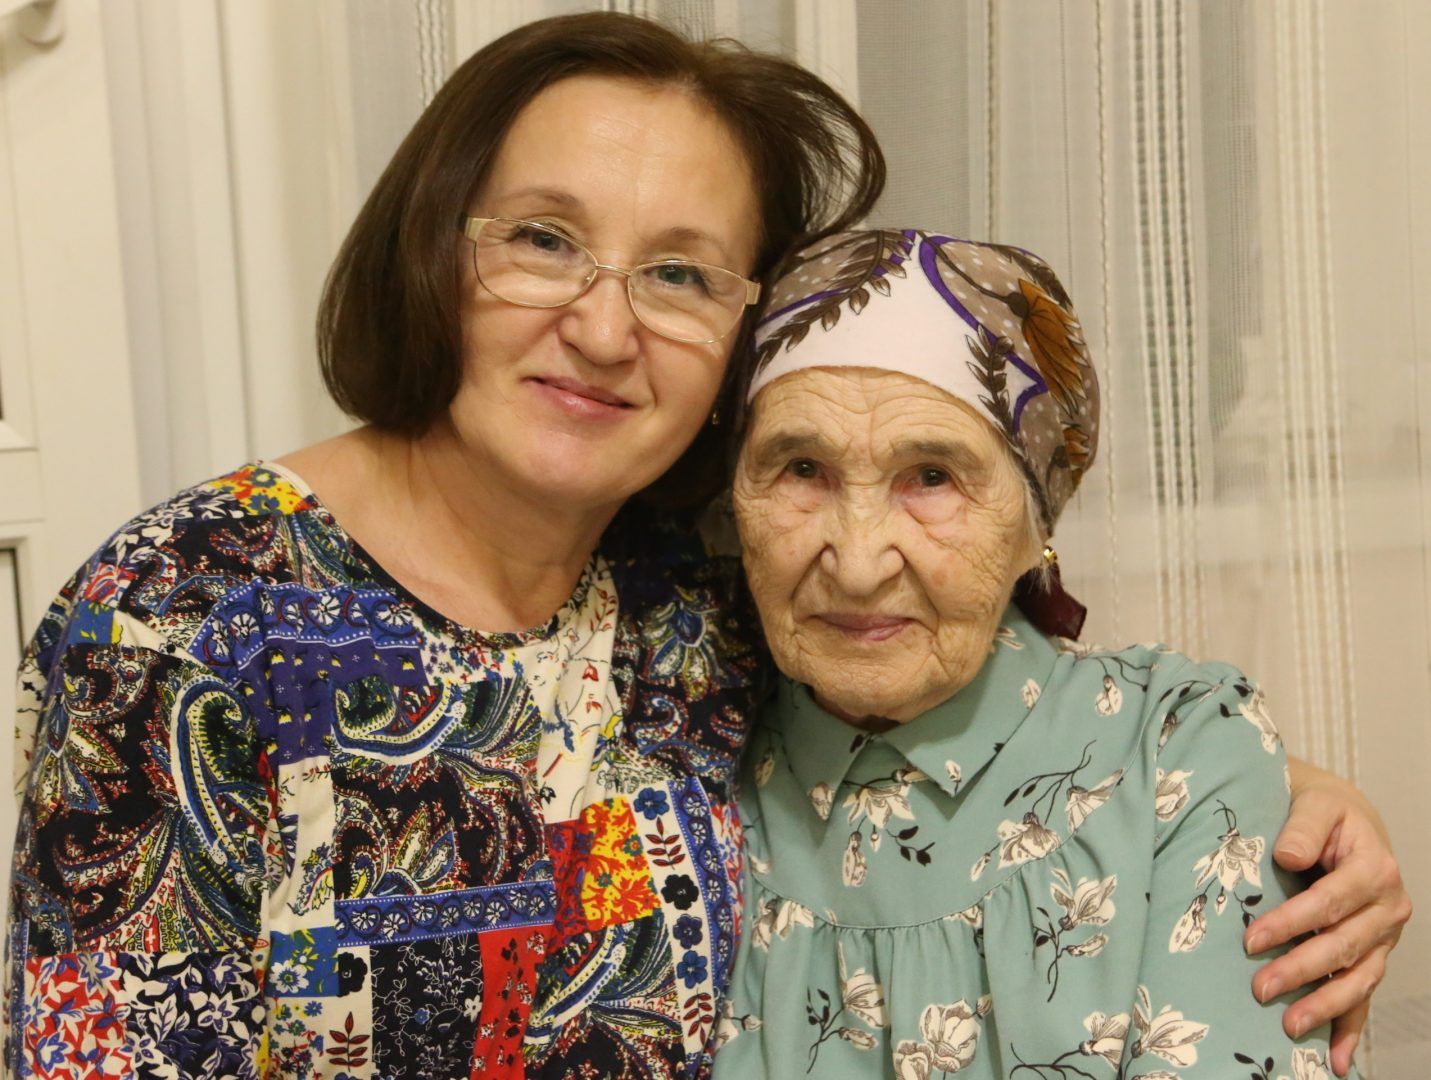 Минебикя Мурзакаева с дочкой Розалией. Фото: Виктор Хабаров